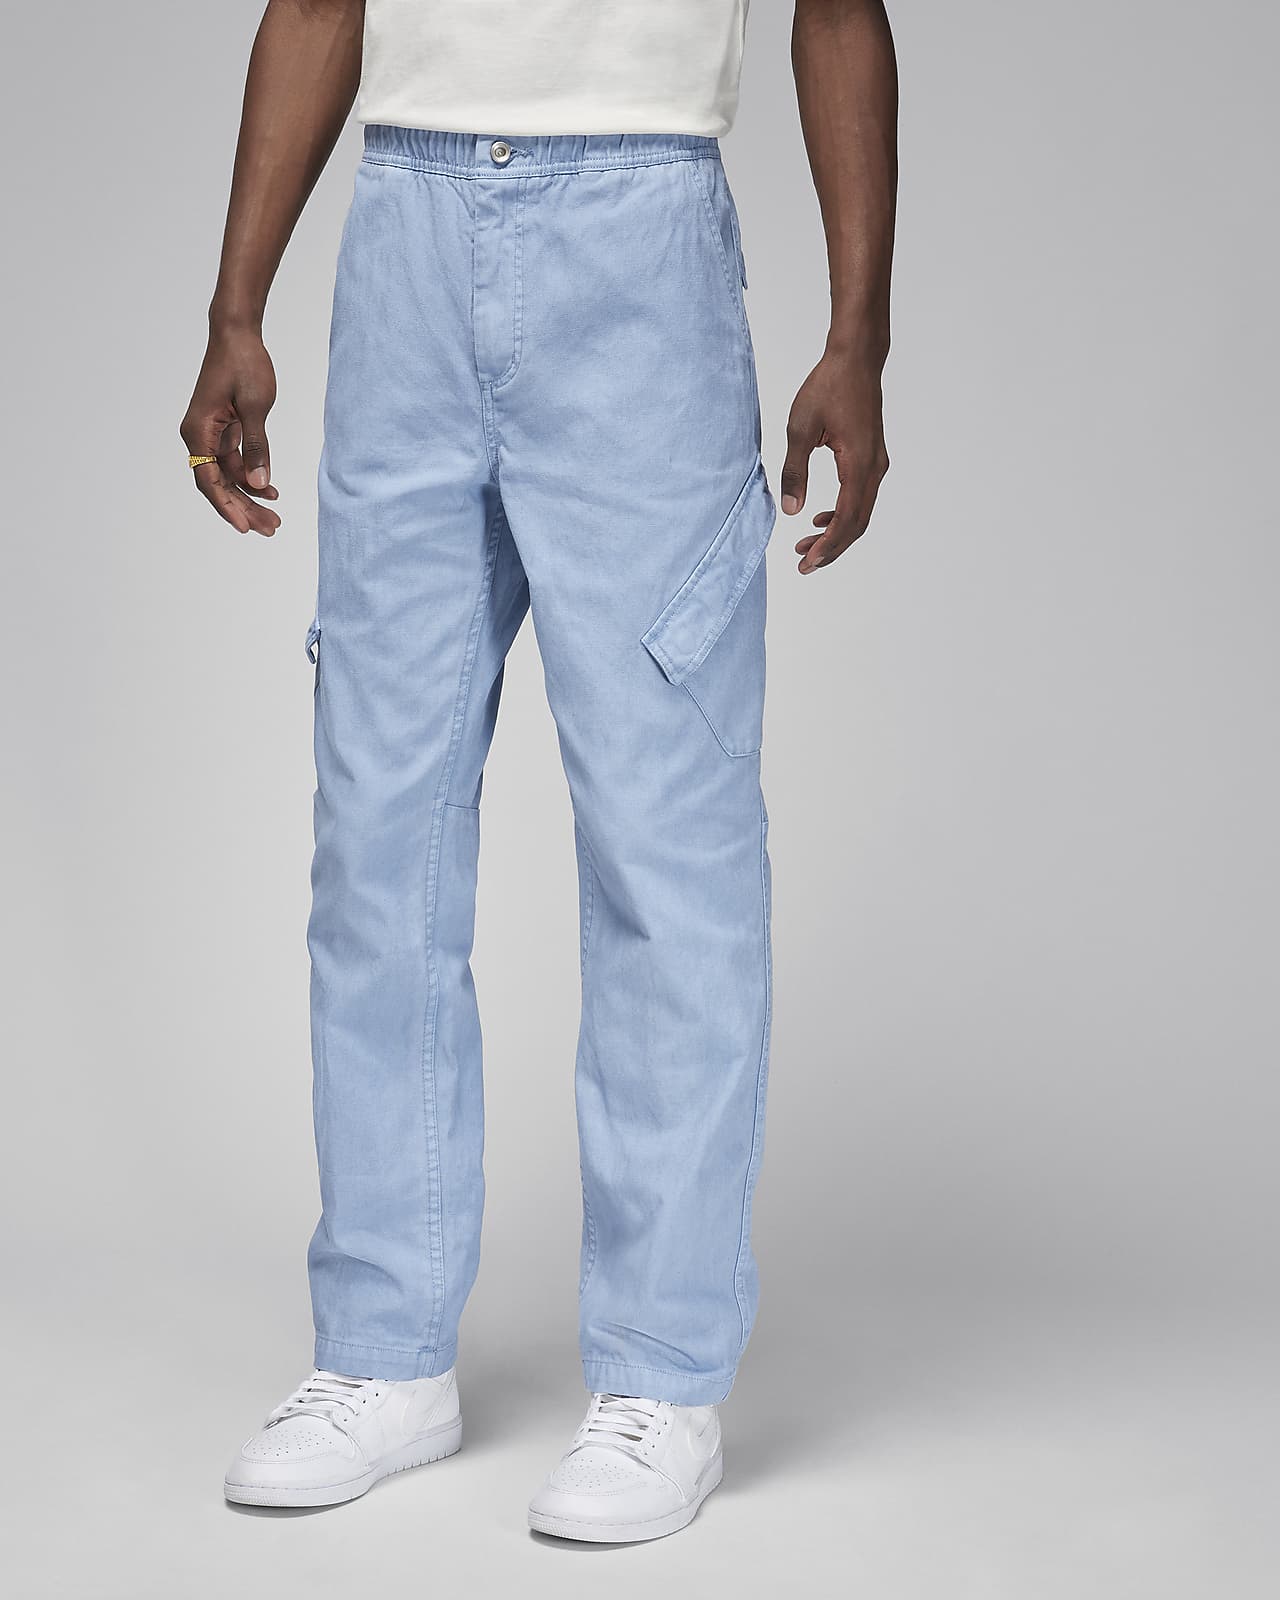 Jordan Essentials Men's Washed Chicago Pants